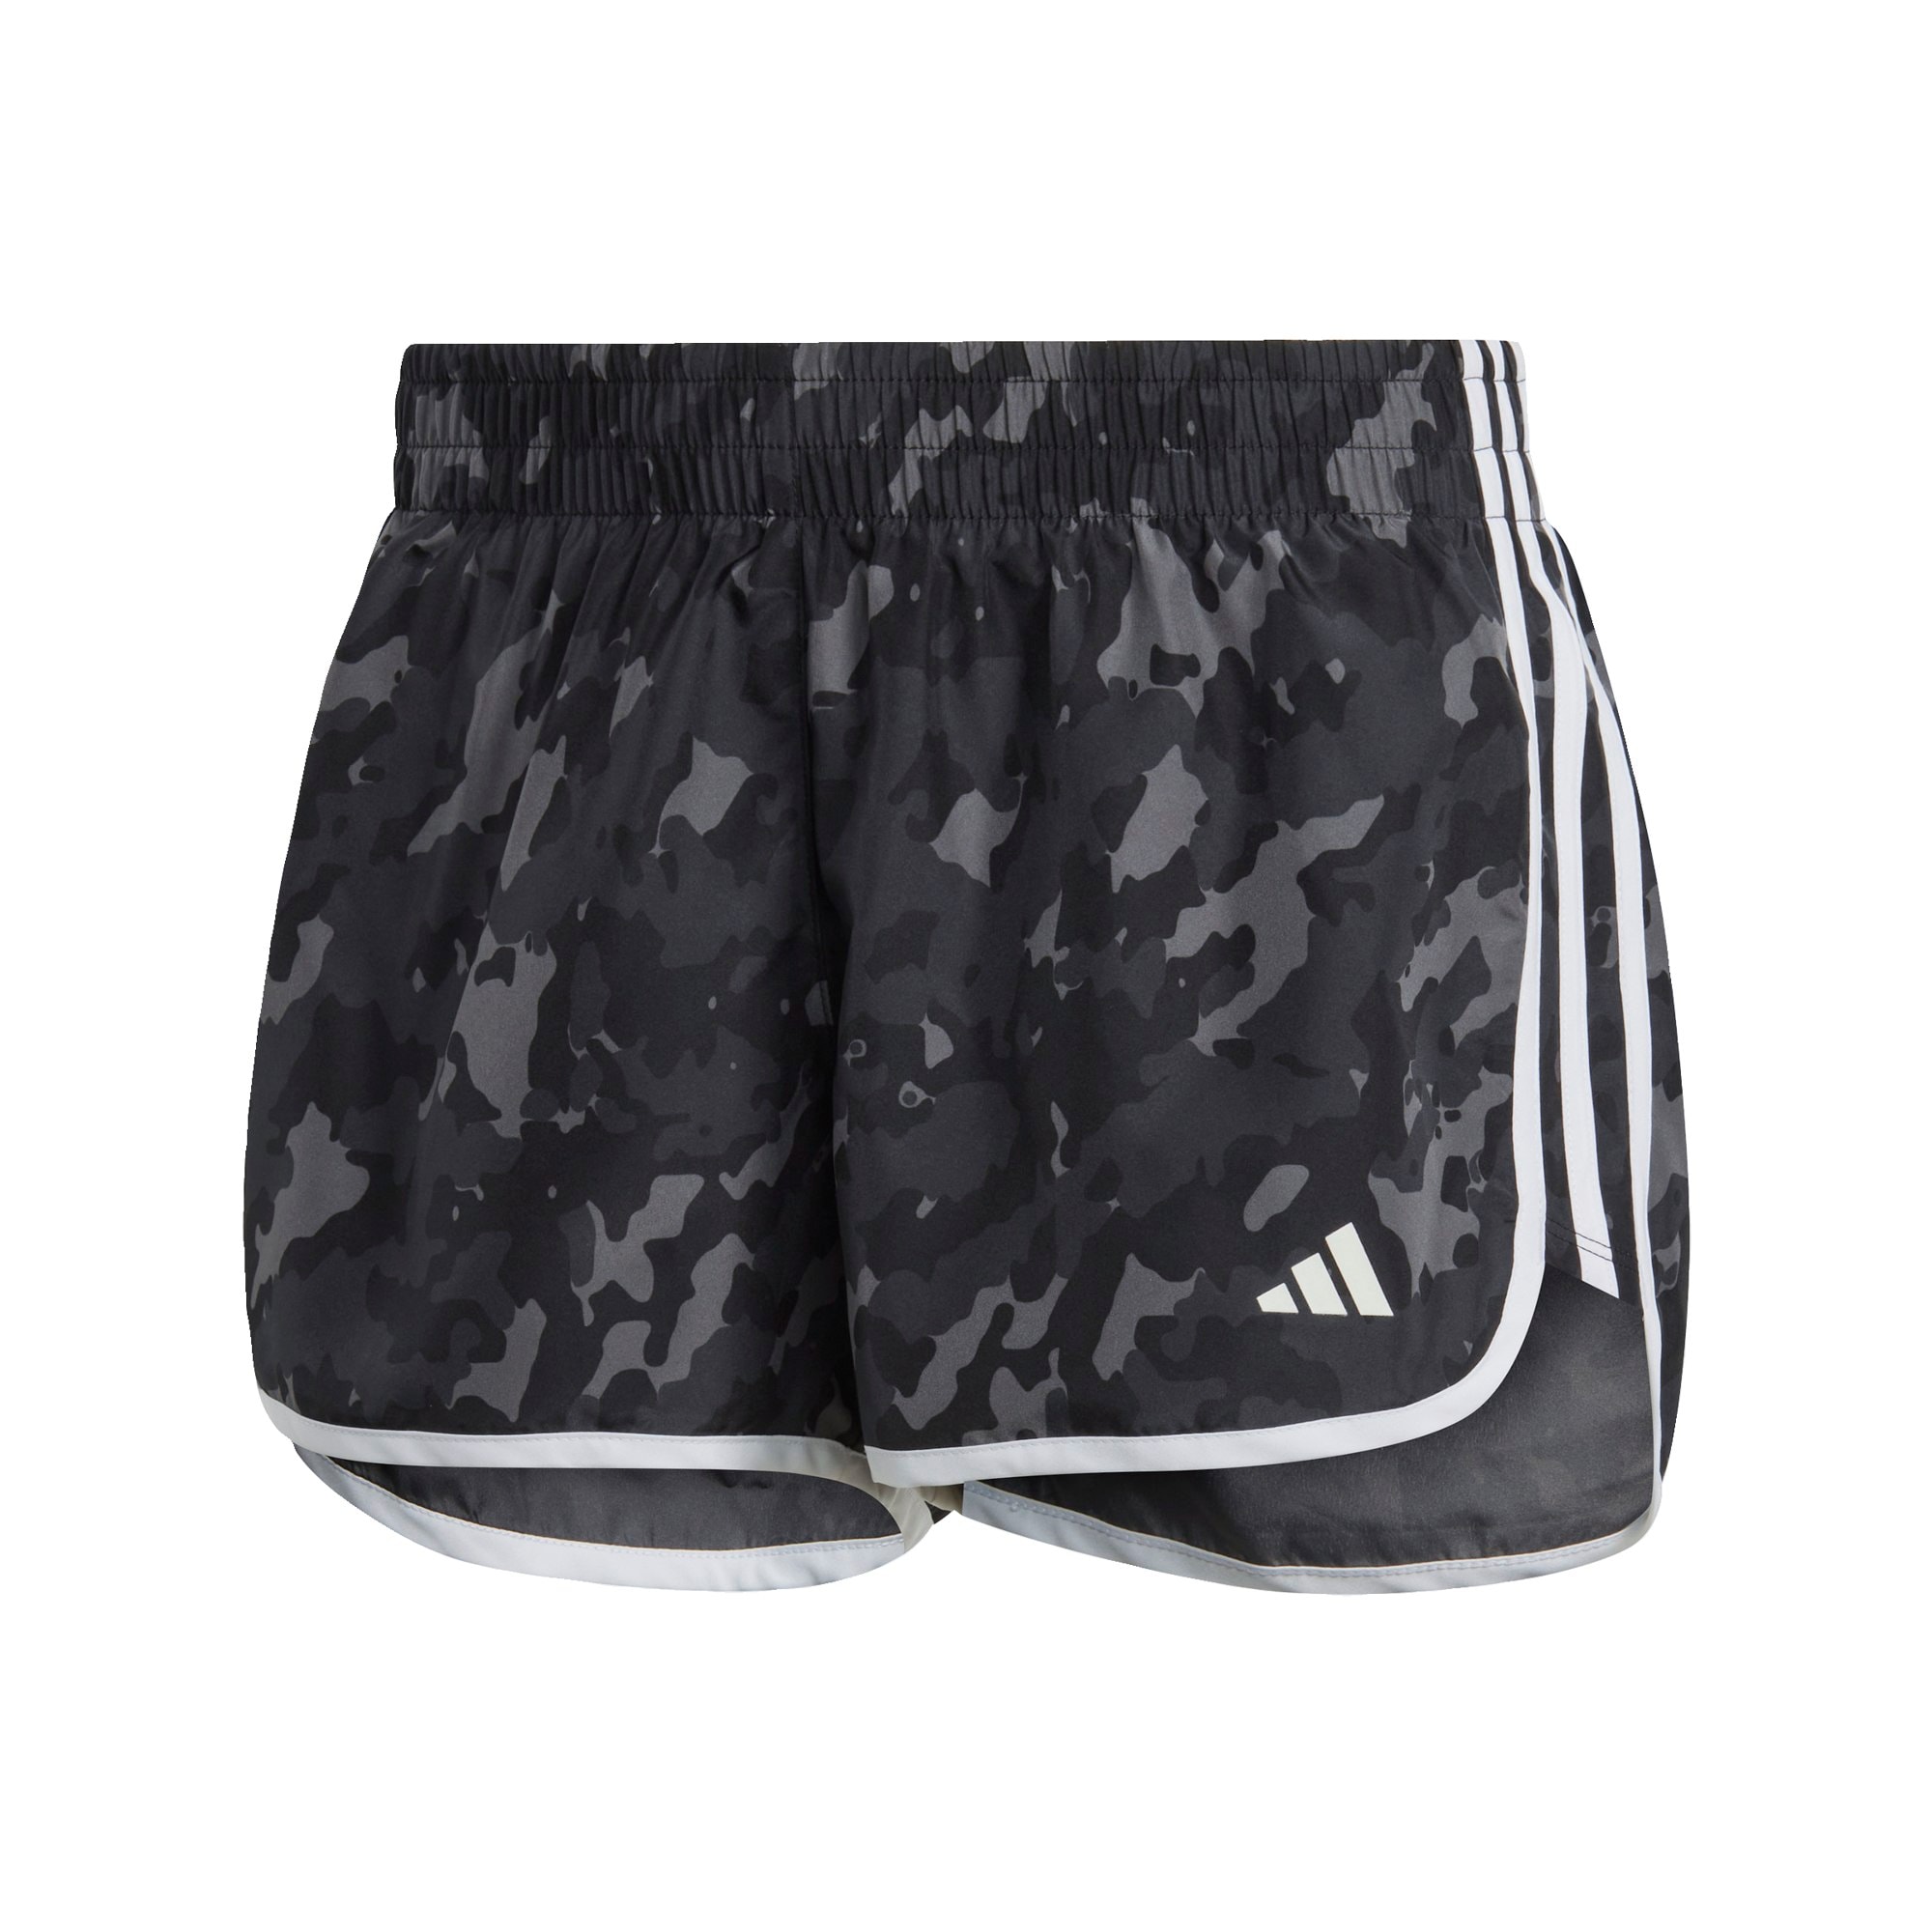 ADIDAS PERFORMANCE Športne hlače 'Marathon 20 Camo'  temno siva / črna / bela